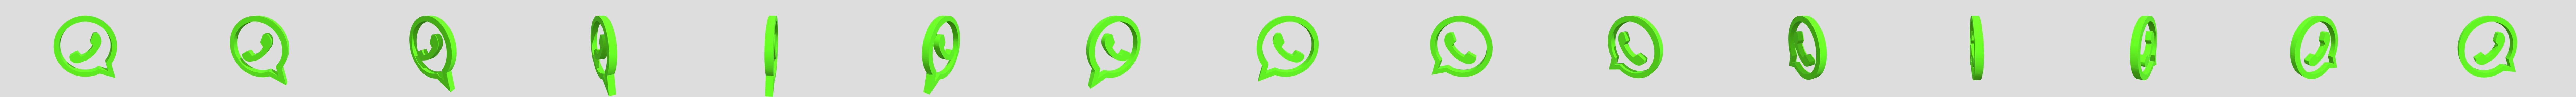 Free WhatsApp Logo Logo 3D Logo download in PNG, OBJ or Blend format